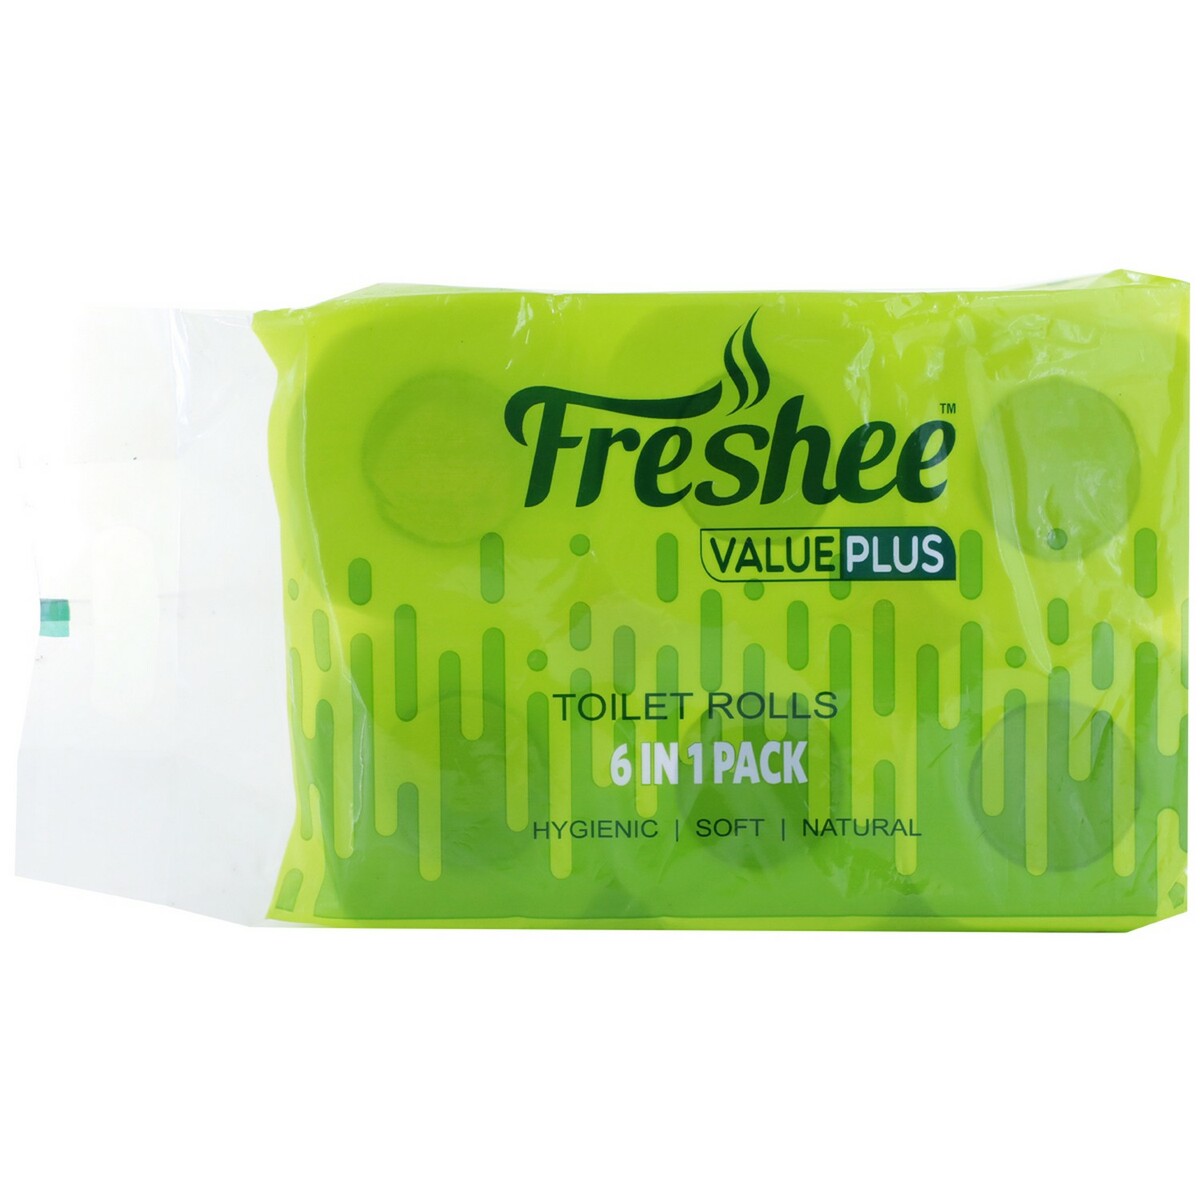 Freshee Toilet Roll Value Plus 6 in 1